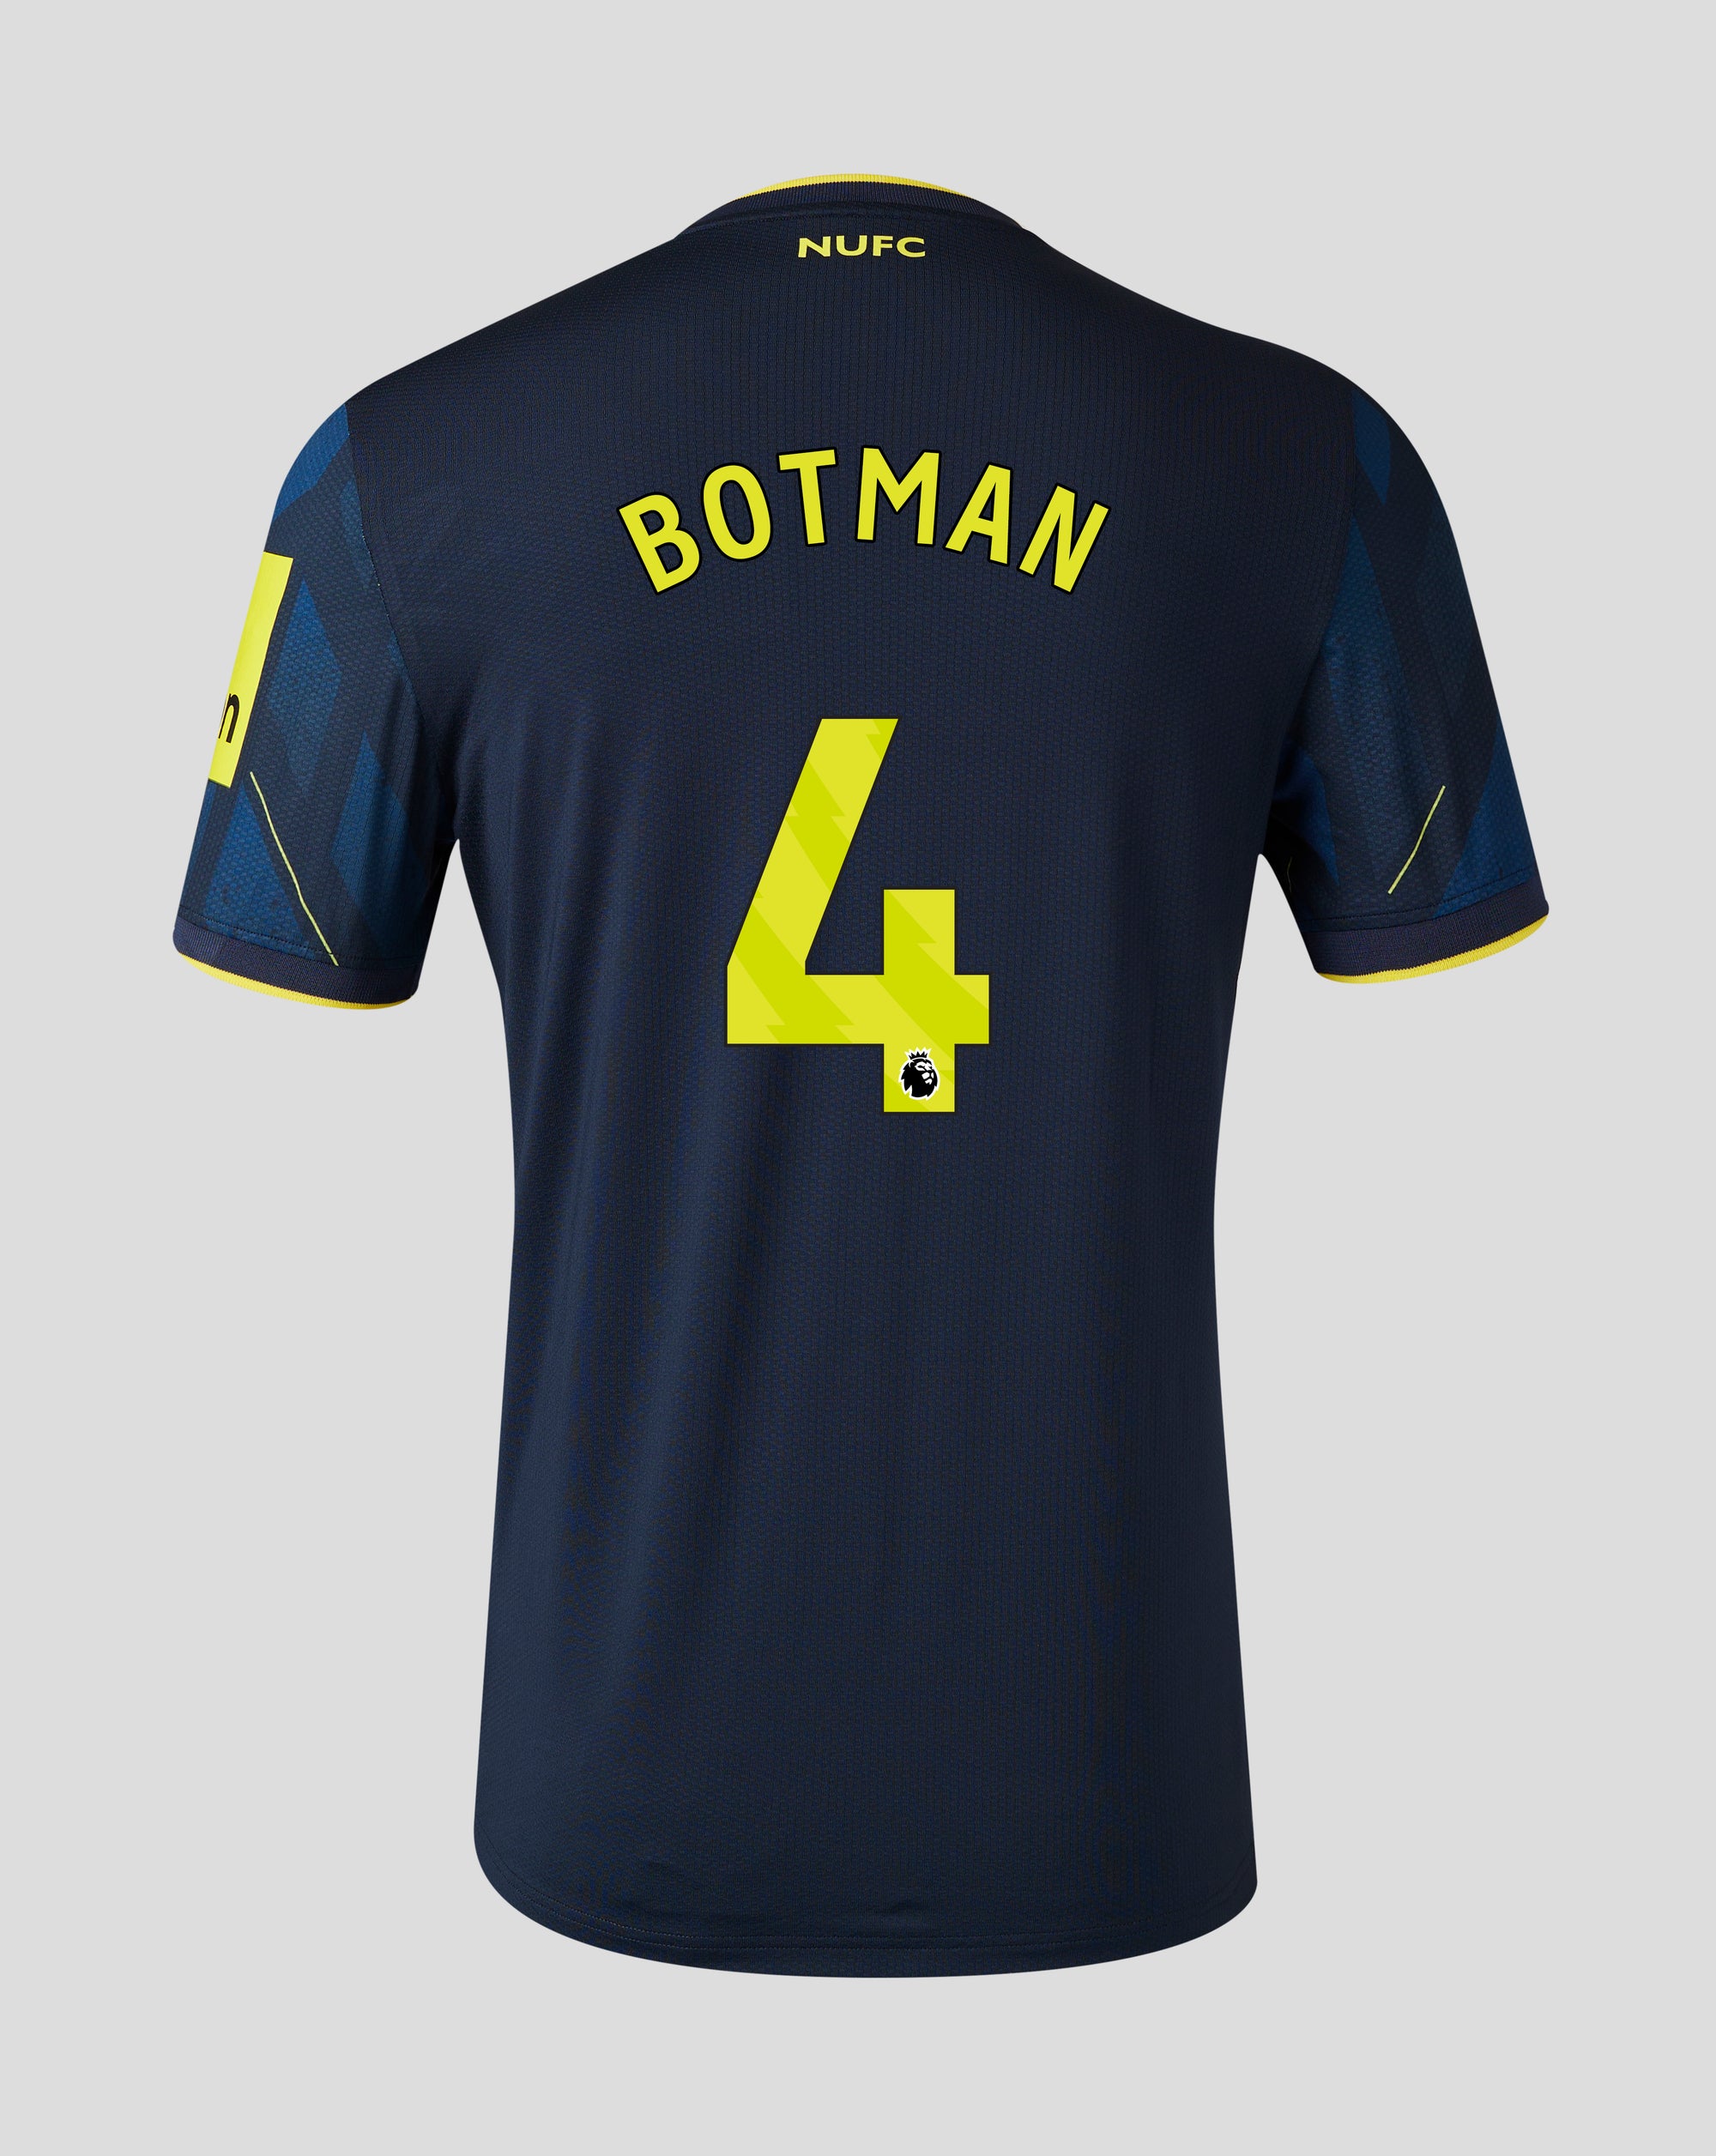 botmanpersonalised shirt